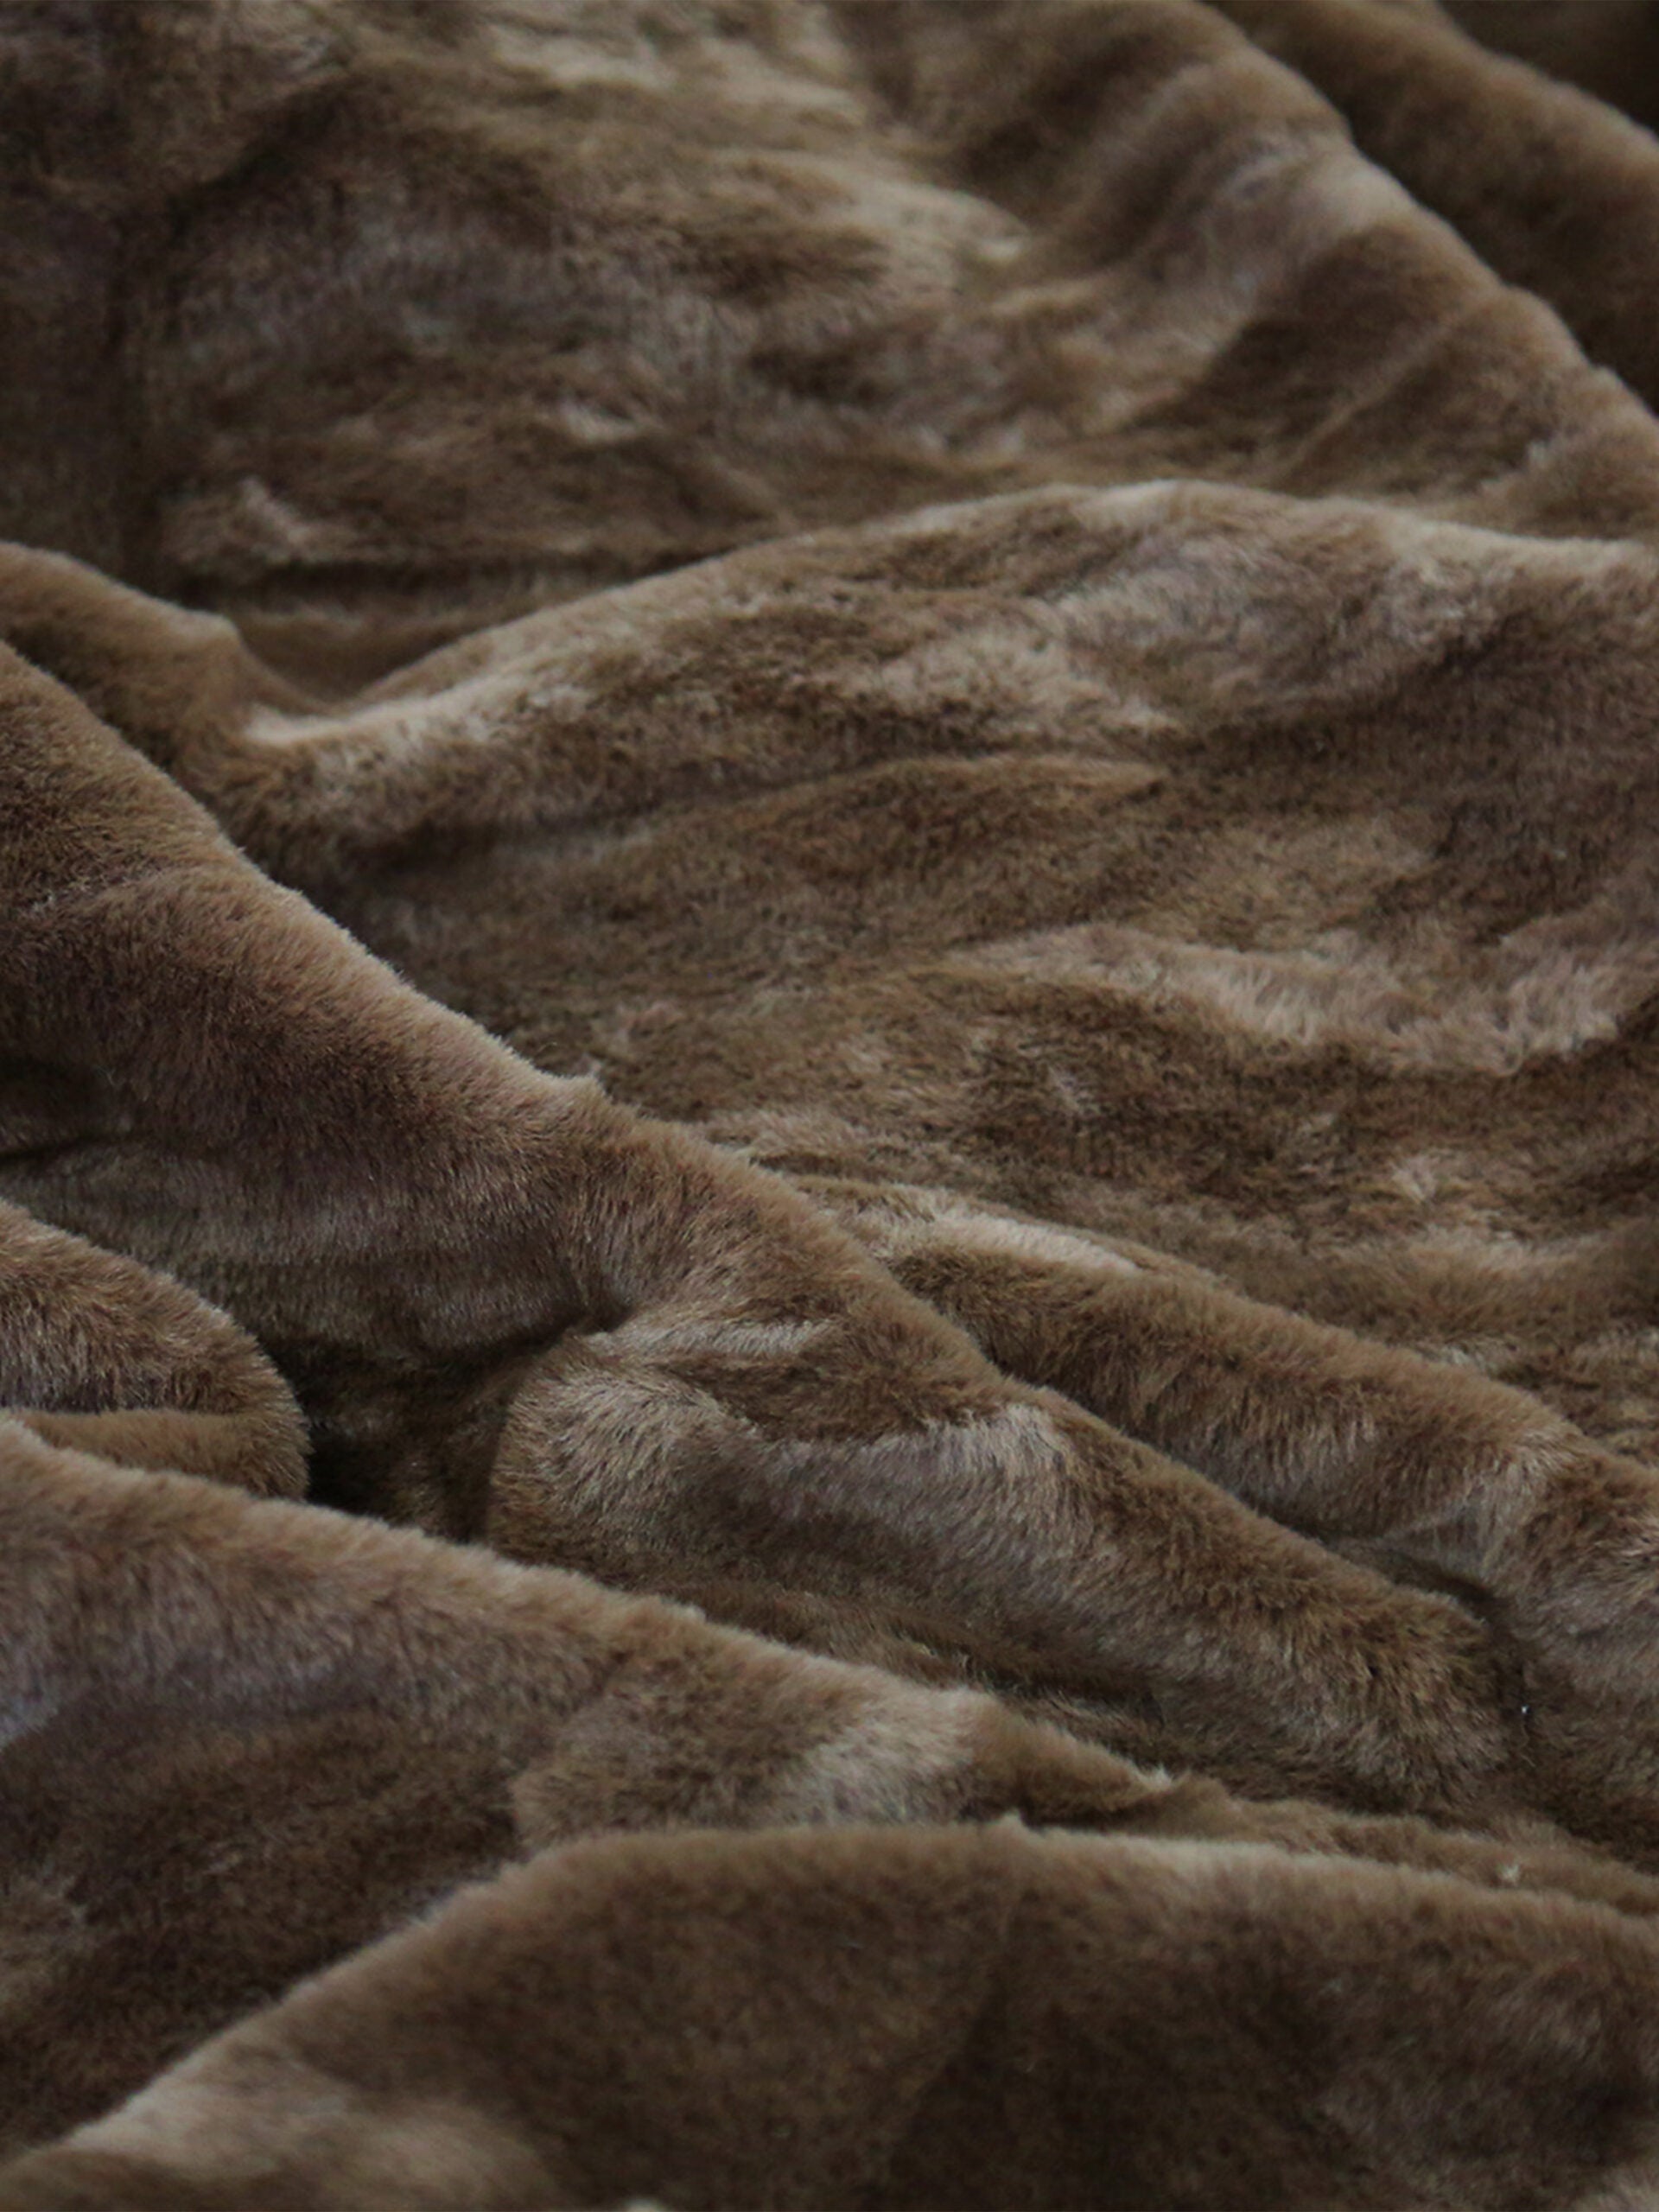 Softness | Winter Blanket